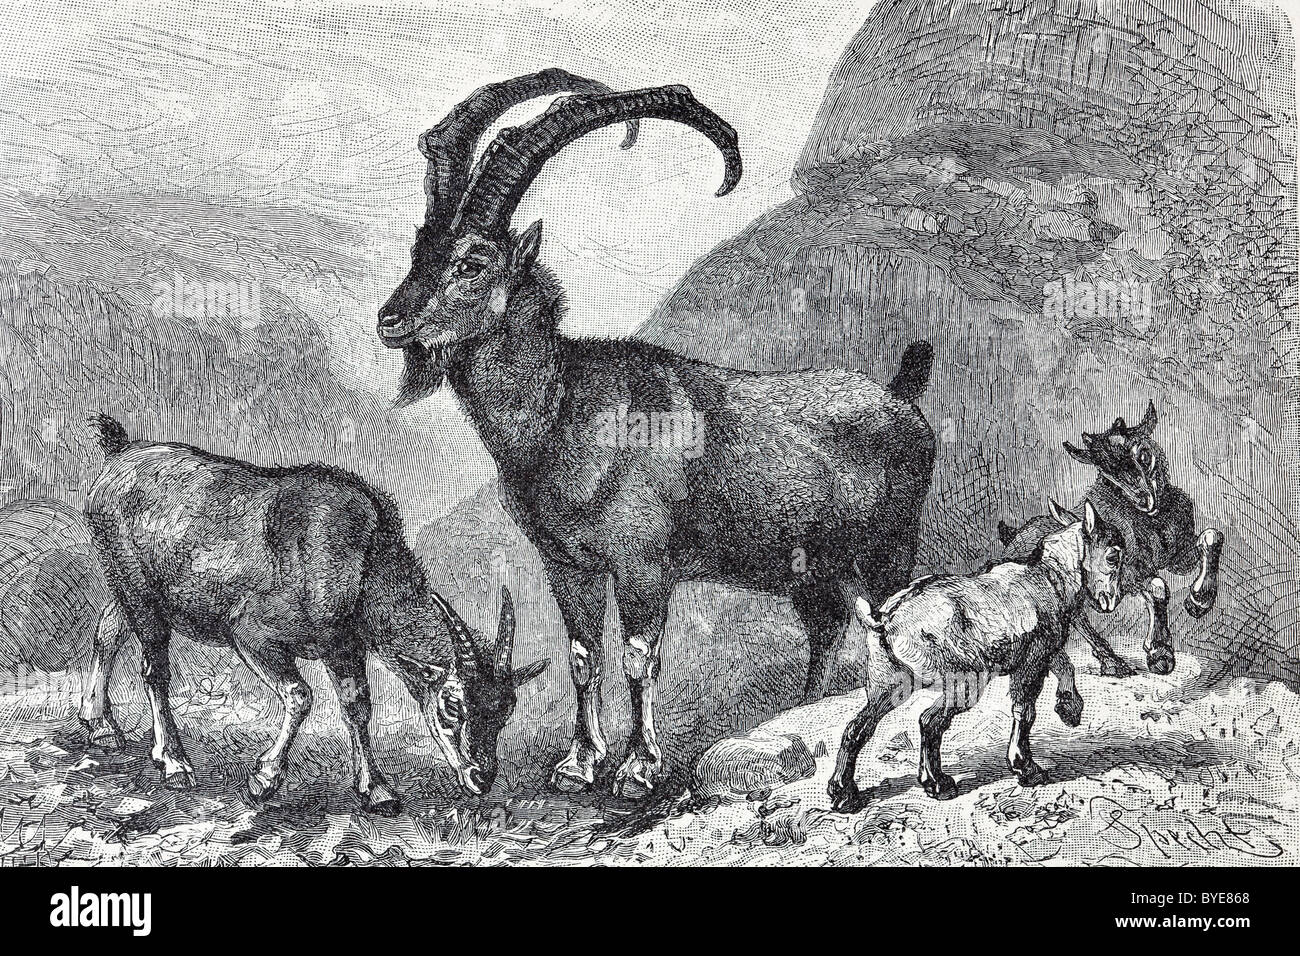 Bezoar Goat or Wild Goat (Capra aegagrus), historical book illustration from the 19th Century, steel engraving Stock Photo